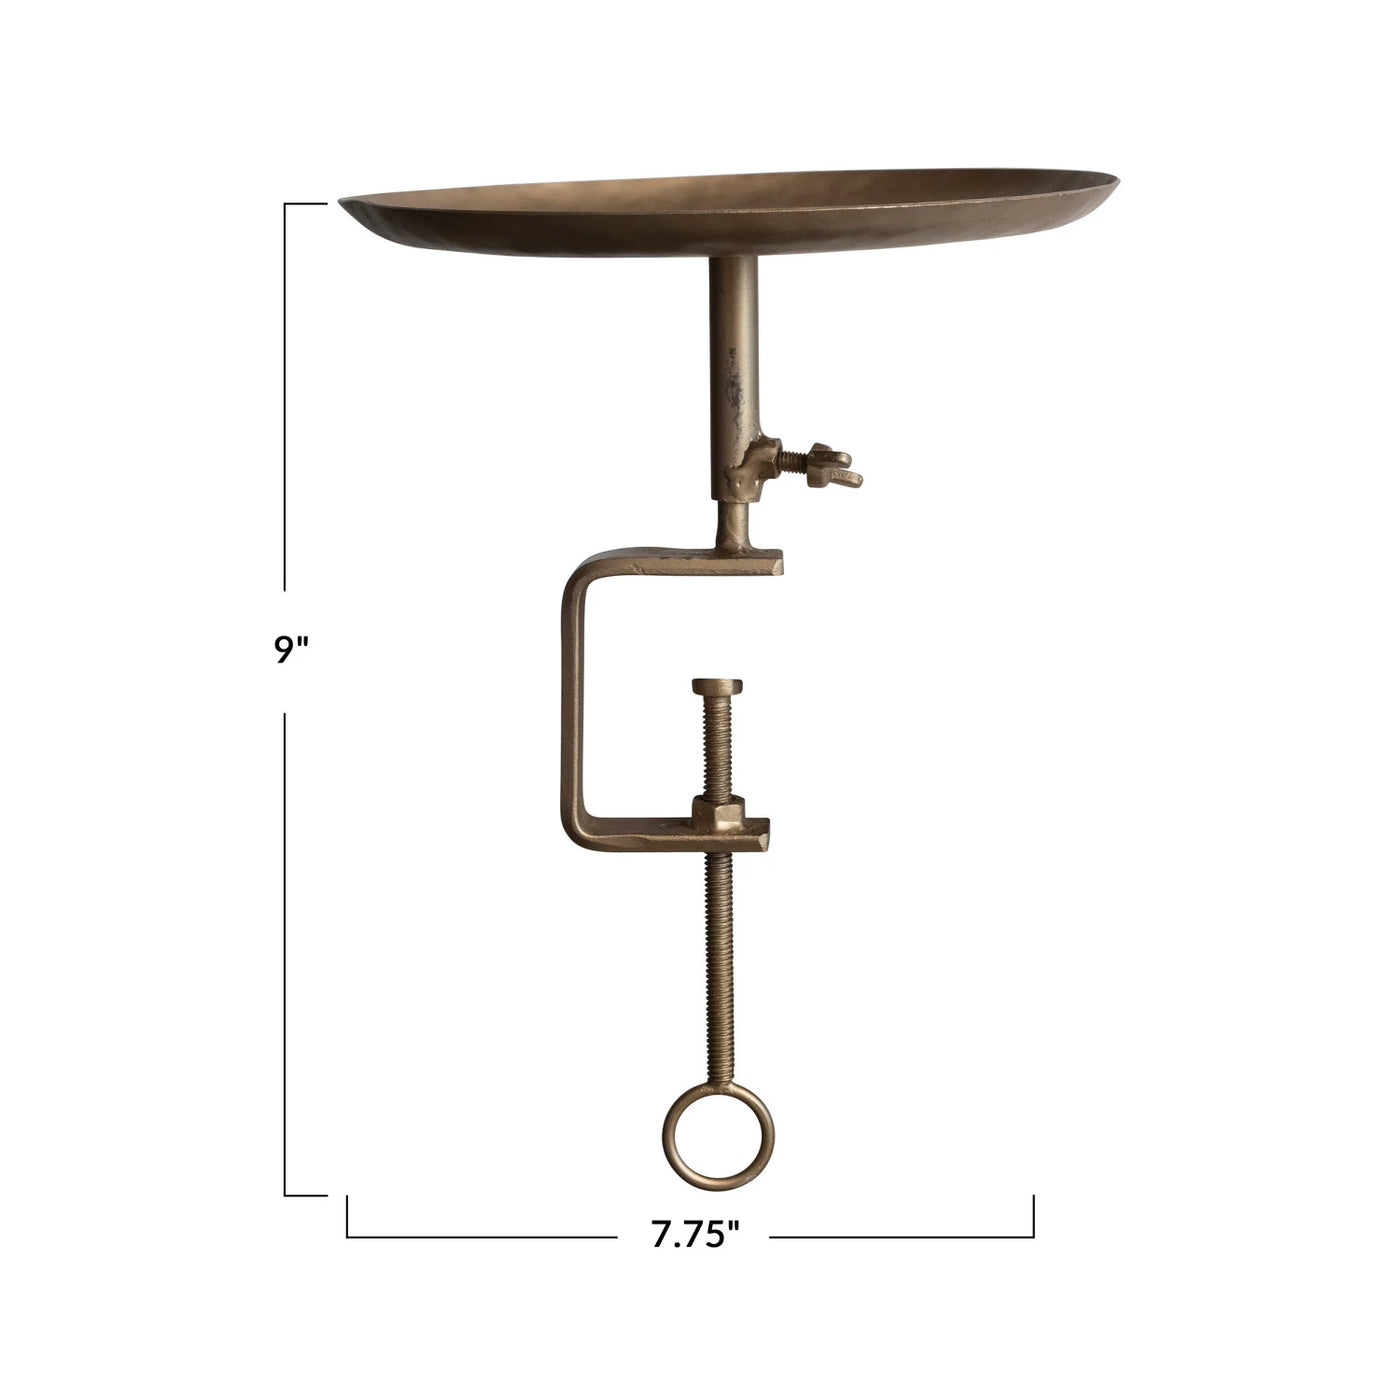 Decorative Metal Mantel/Tableside Tray w/ Adjustable C-Clamp